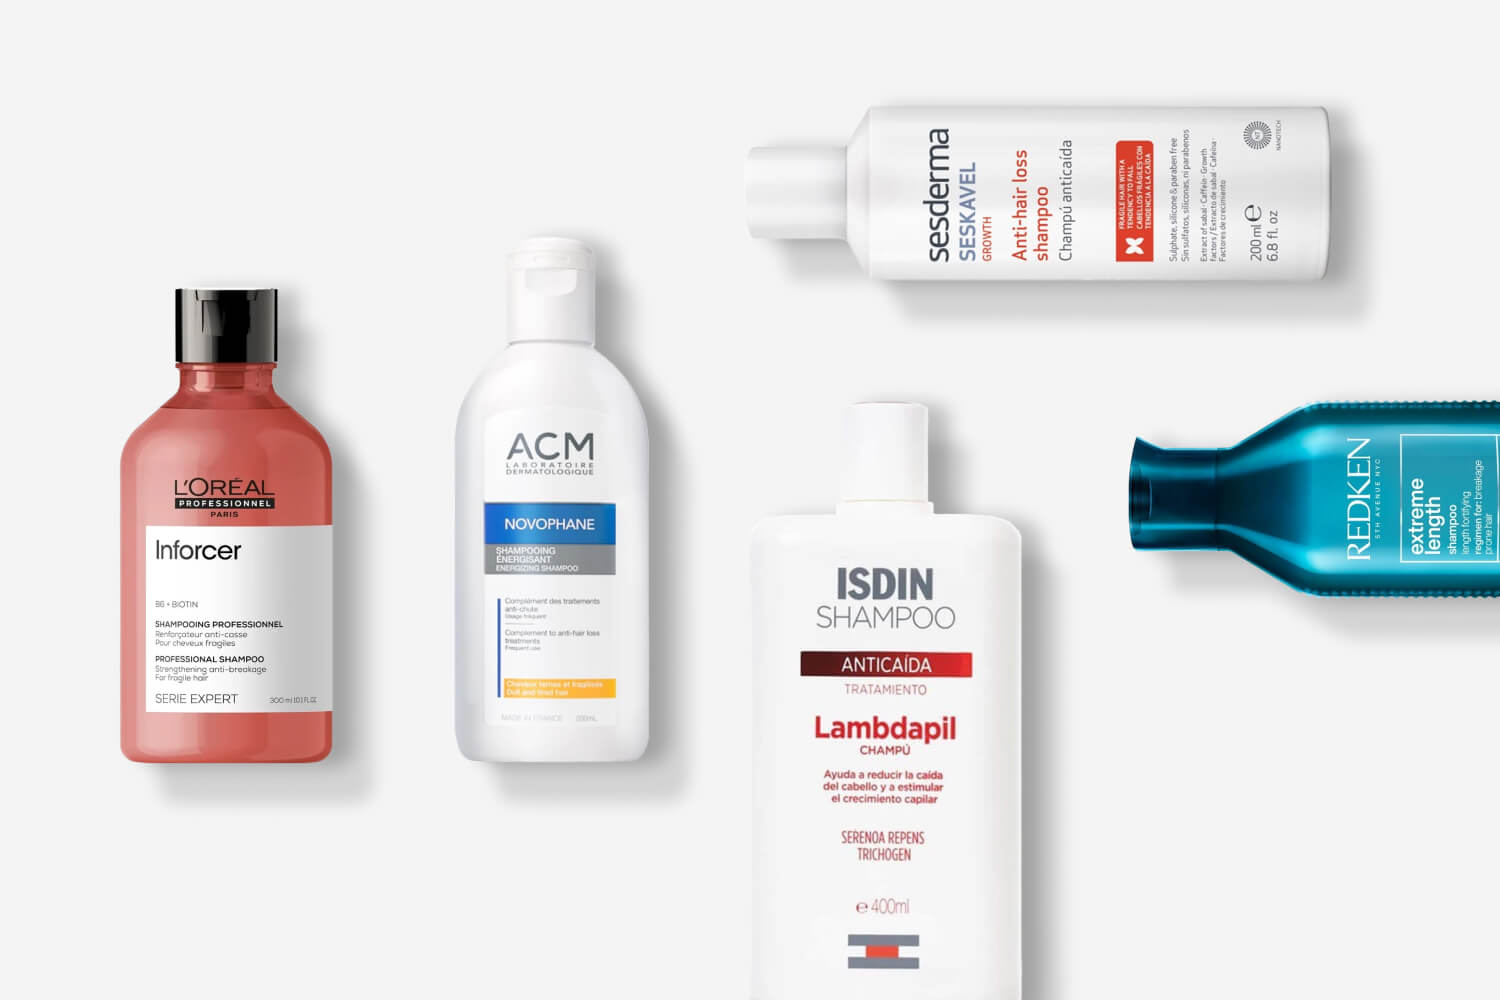 Does Biotin Shampoo Strengthen Your Hair?